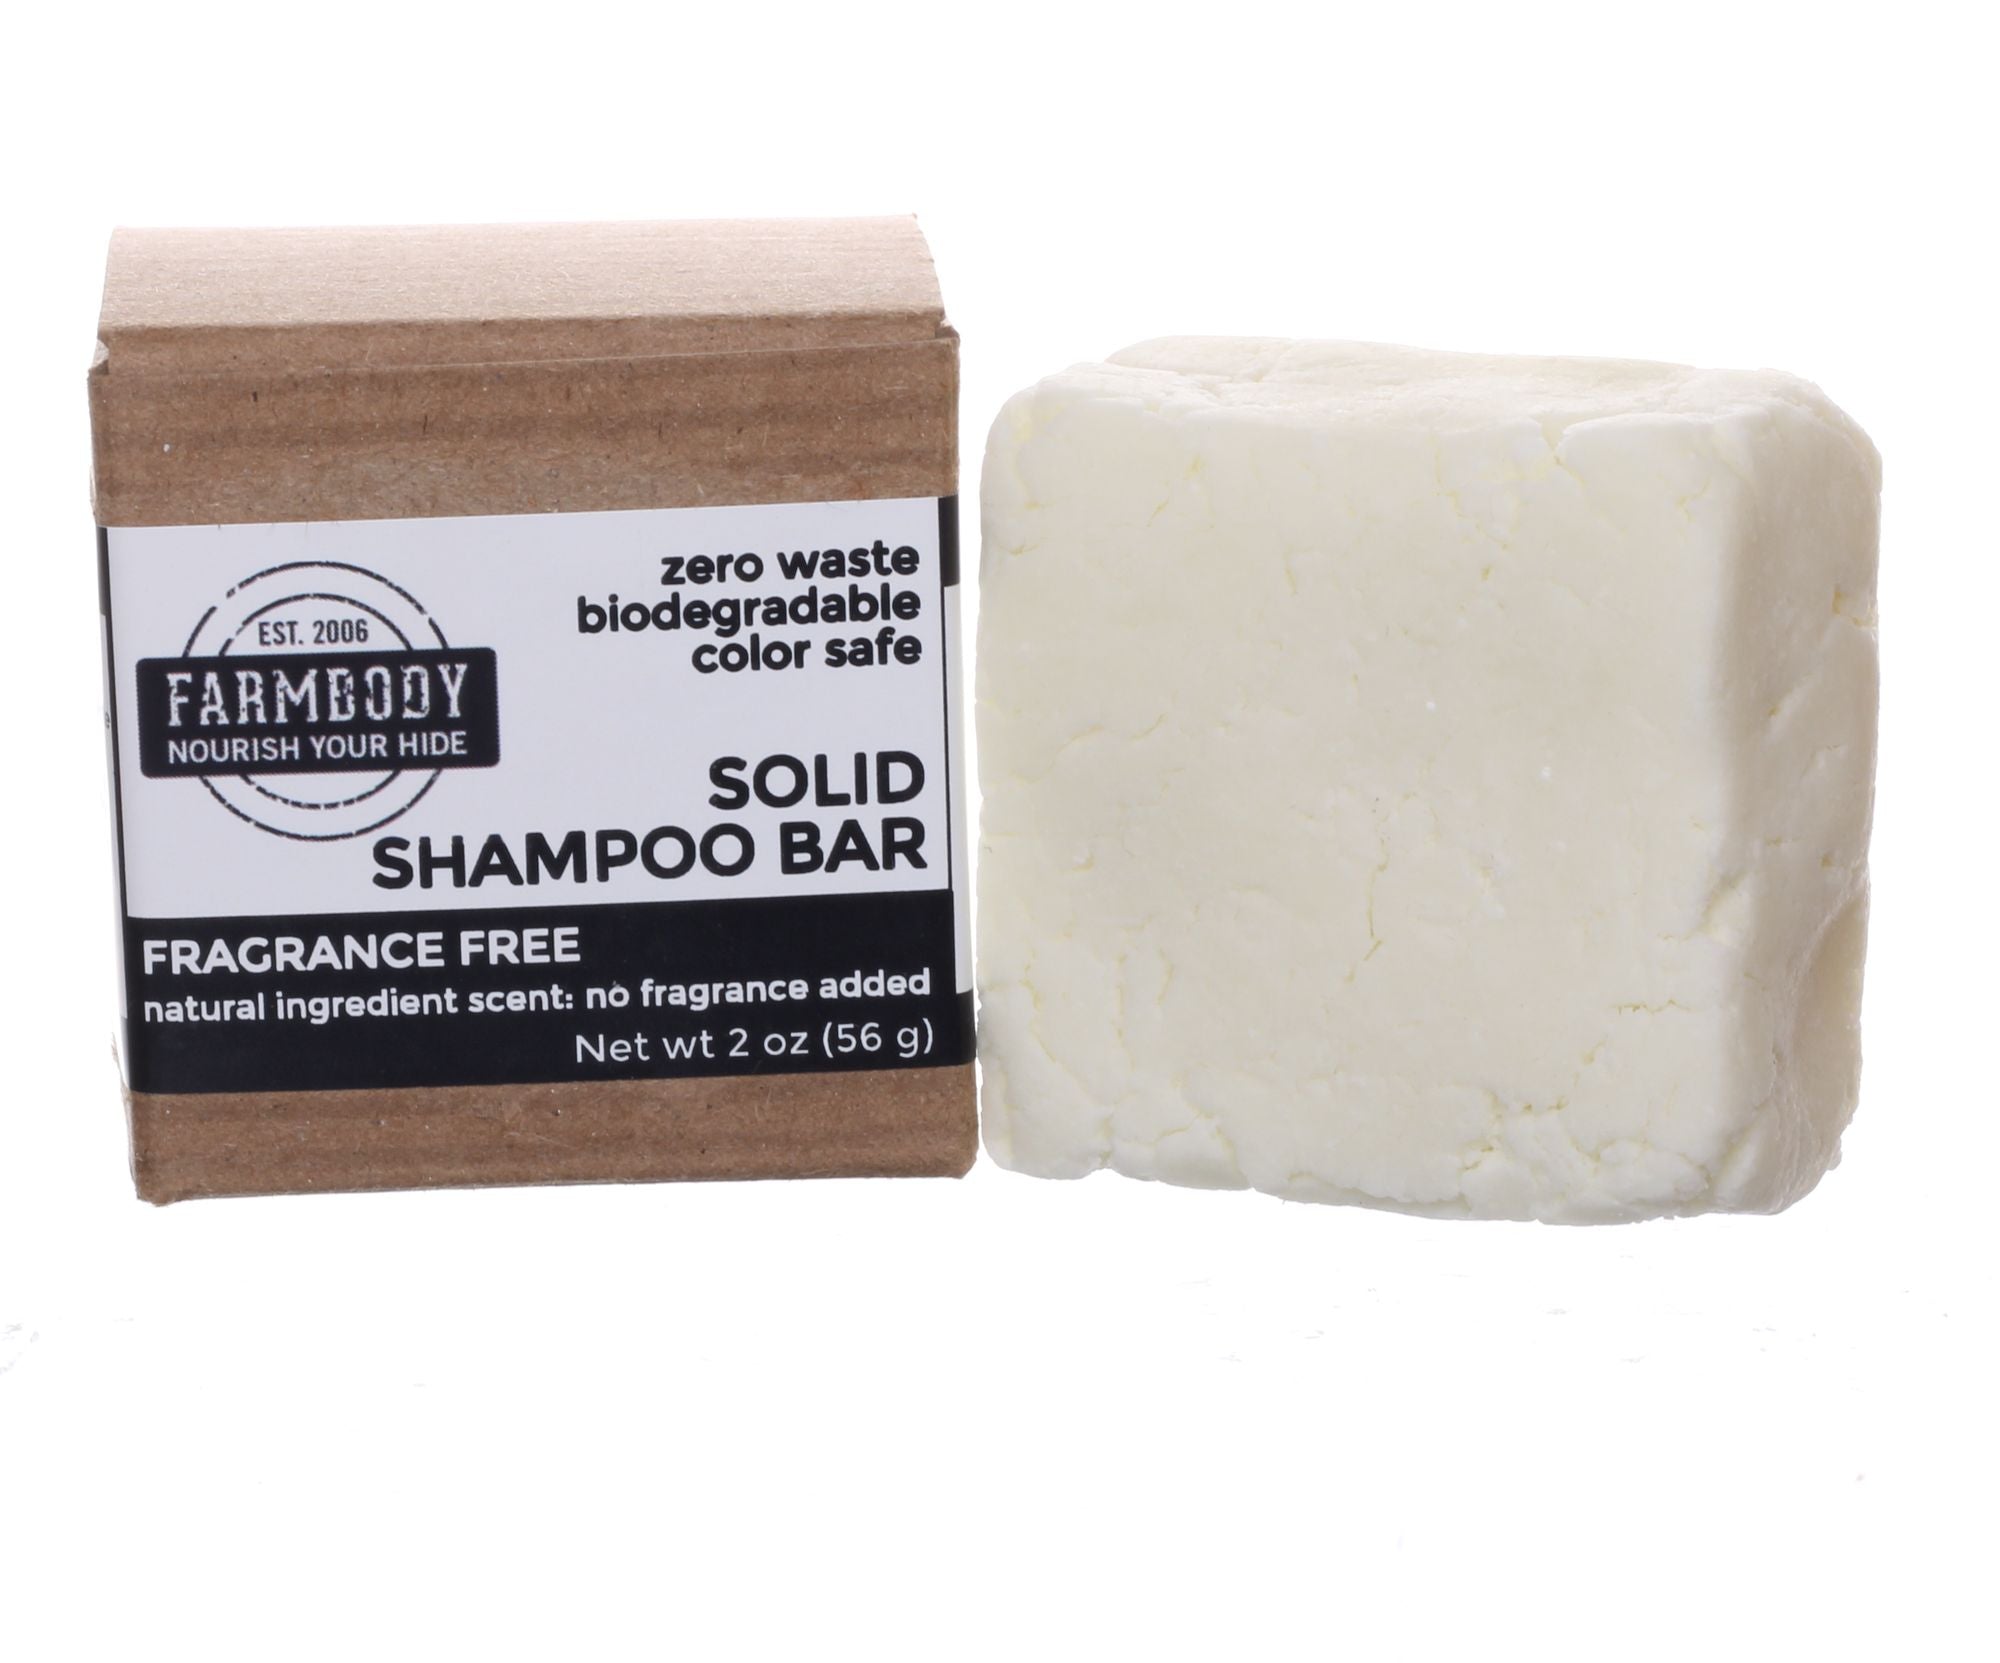 Farmbody zero waste biodegradable color safe solid shampoo bar fragrance free square bar